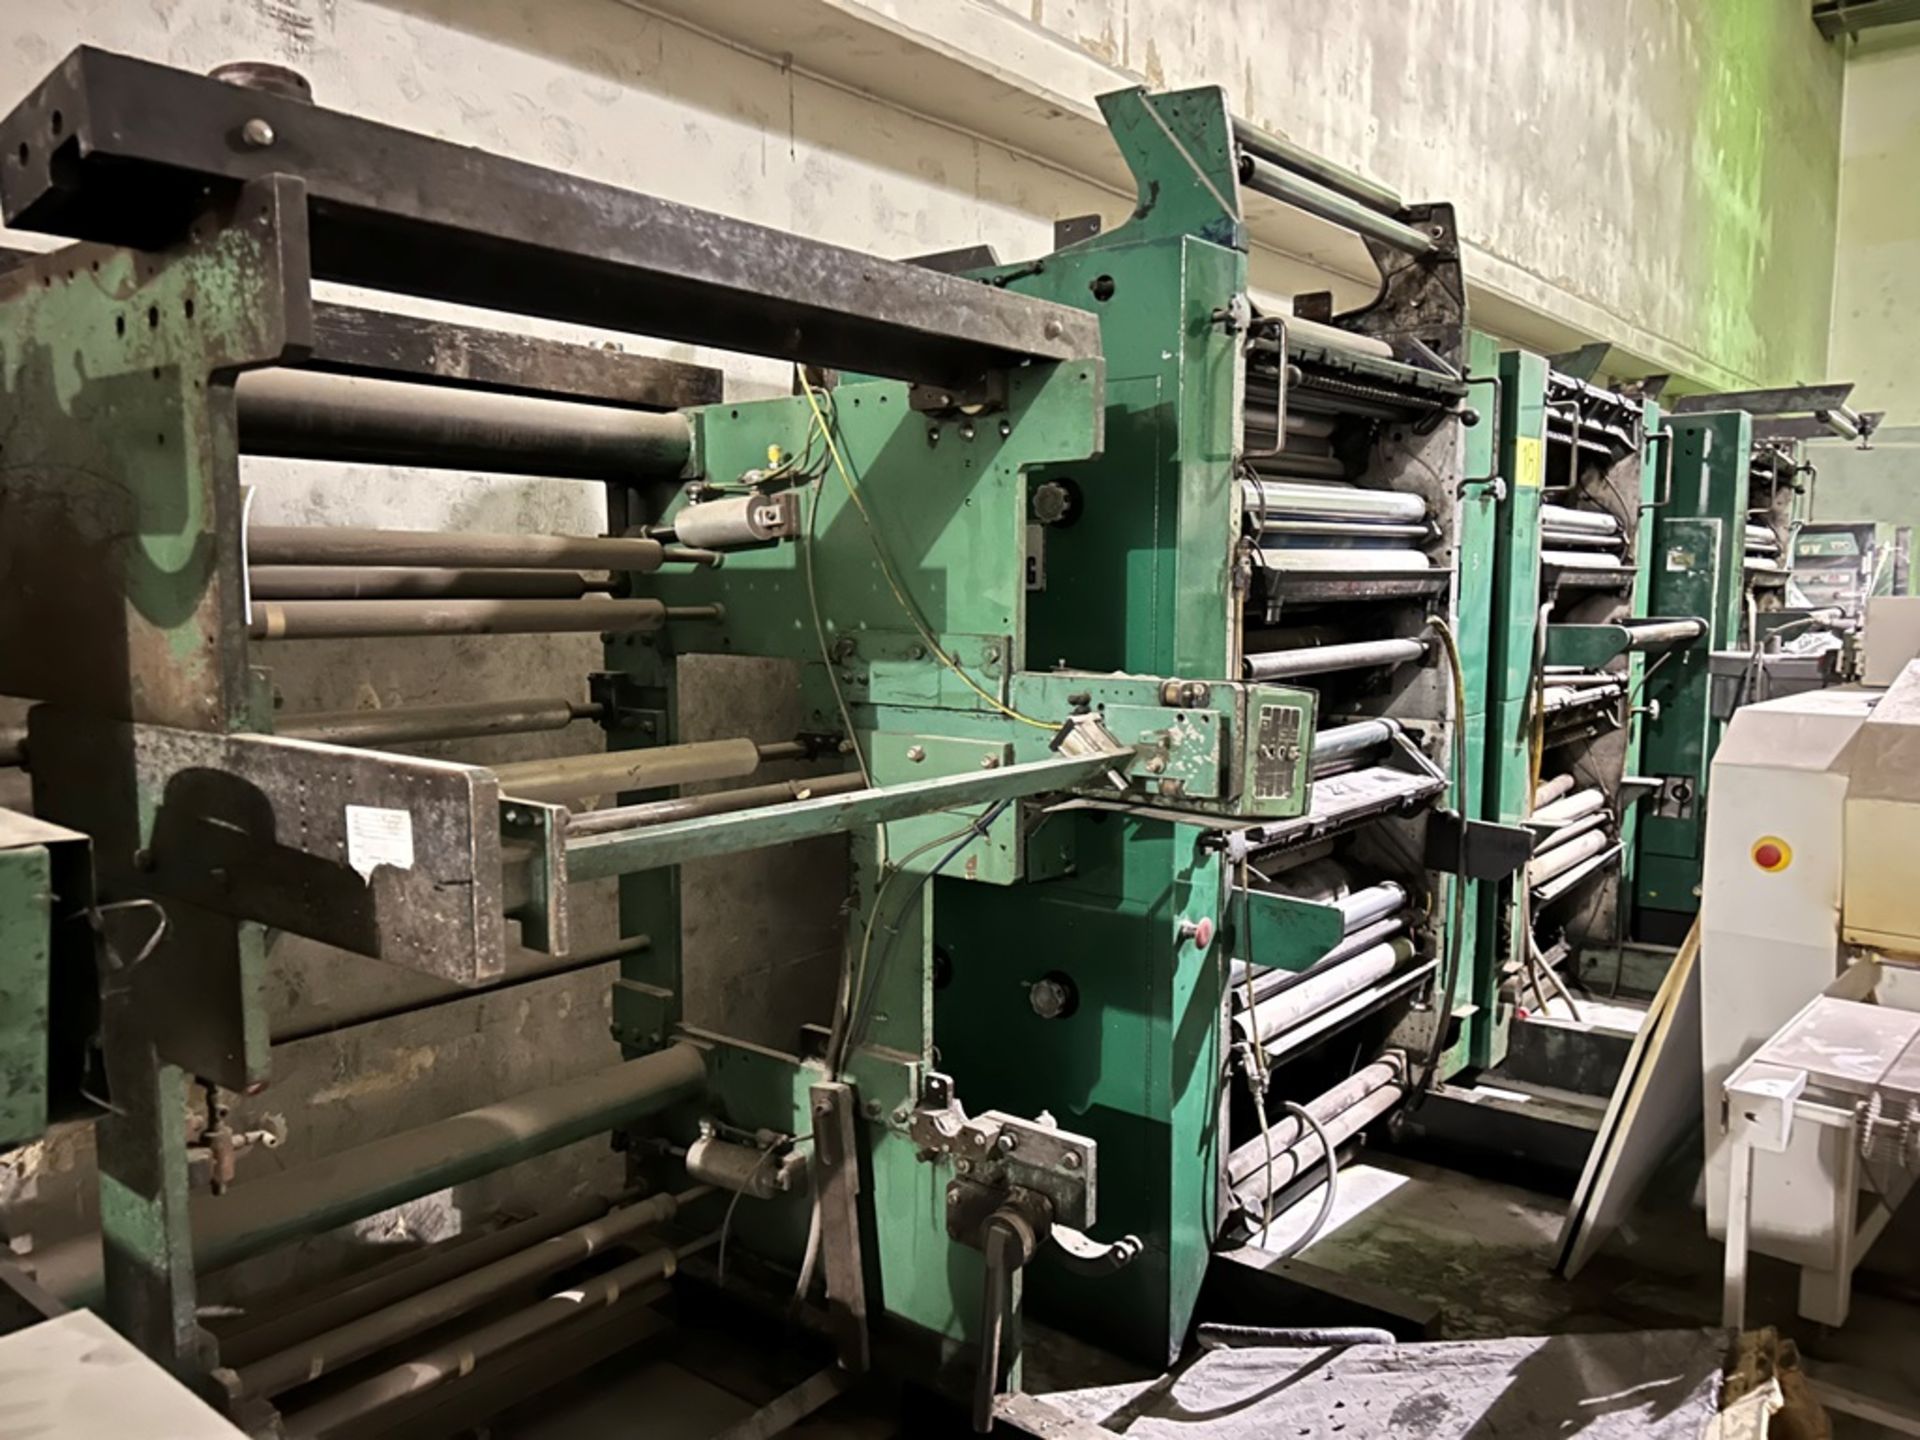 NEWS KING rotary printing machine, Model KING PRESS KJ8, Serial No. P2680-1.F21C2-9-89 CM-1000, Yea - Image 9 of 14